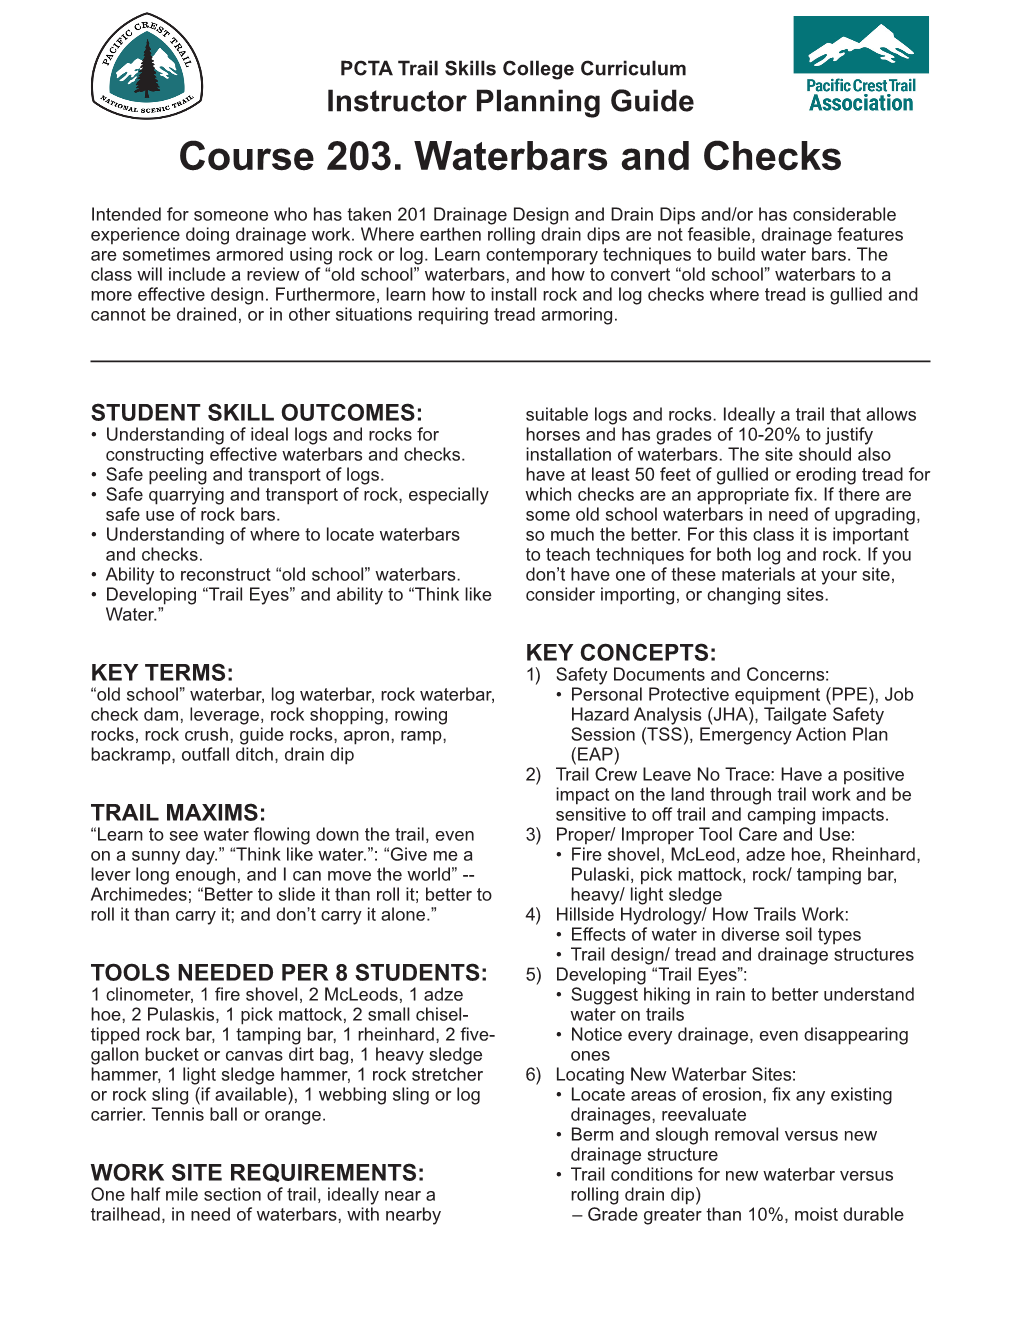 Course 203. Waterbars and Checks